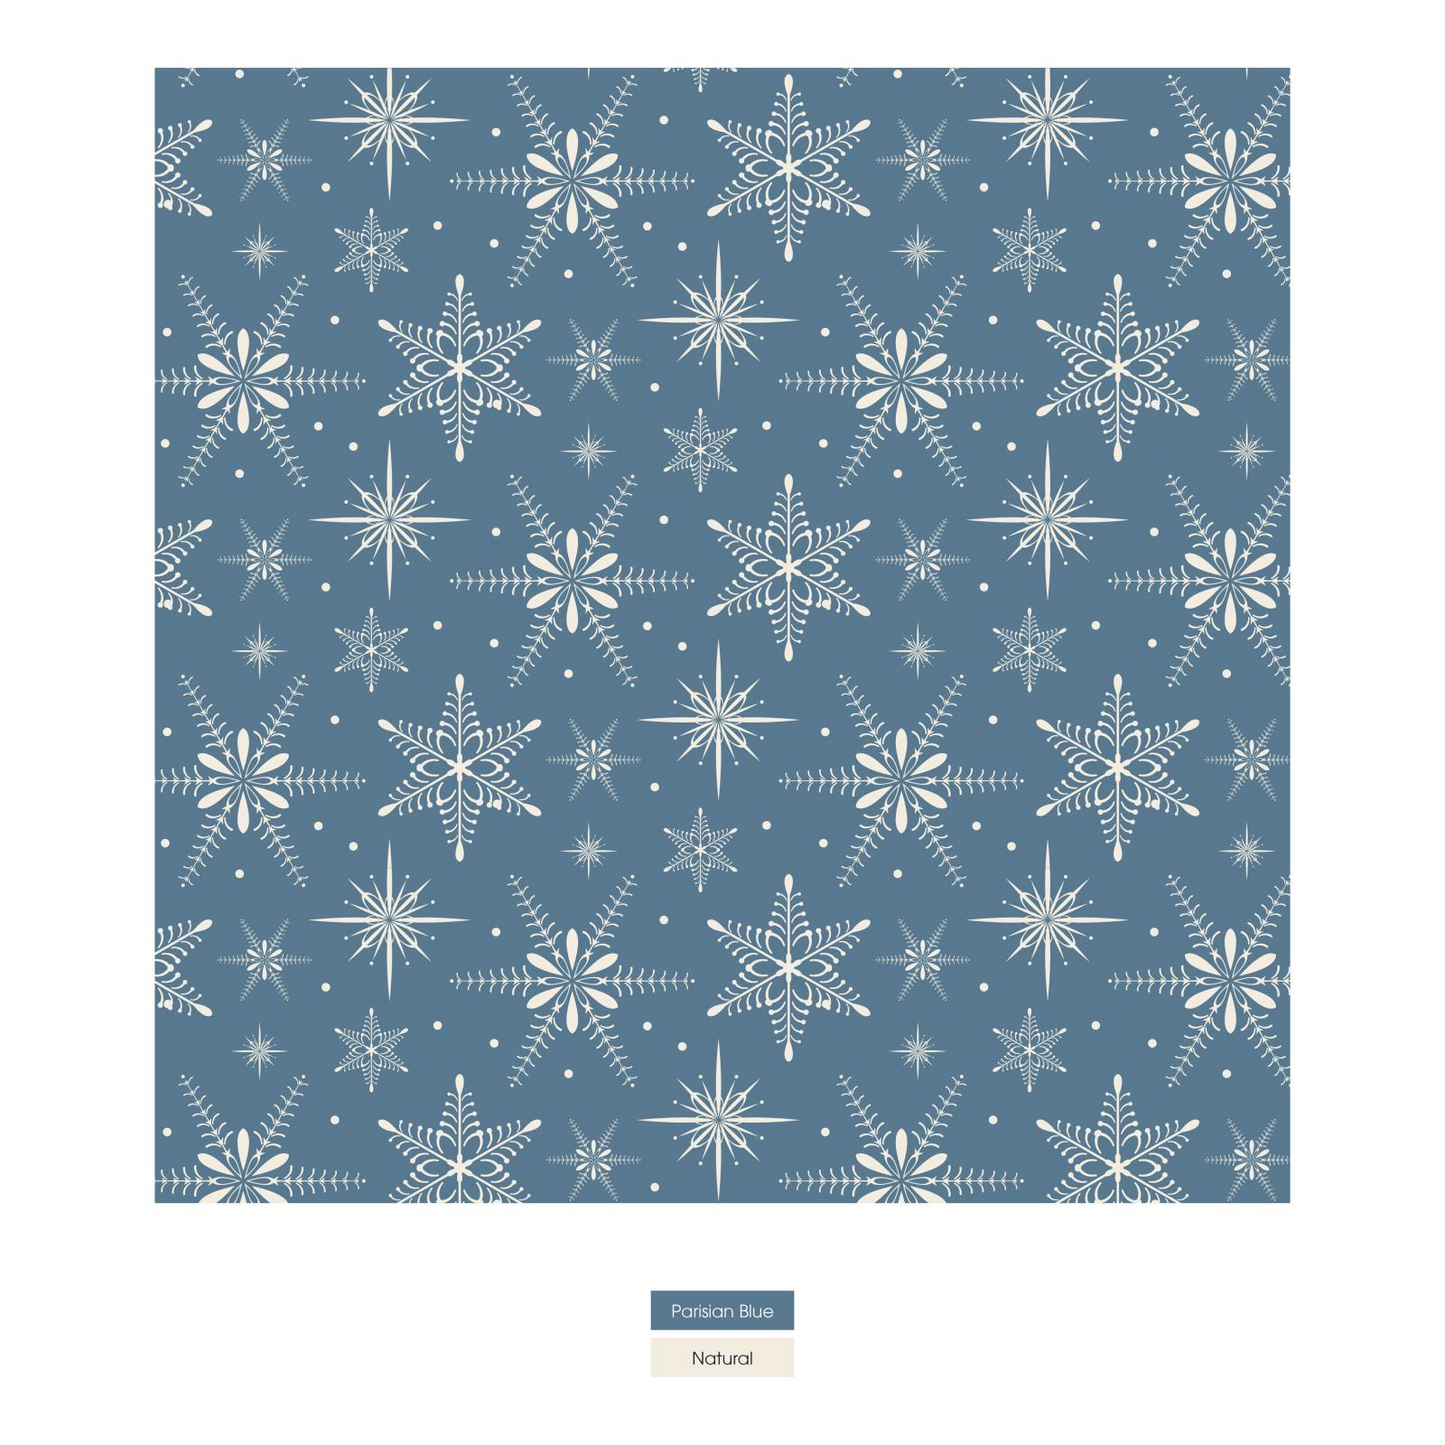 Kickee Pants Print Coverall with Snaps: Parisian Blue Snowflakes